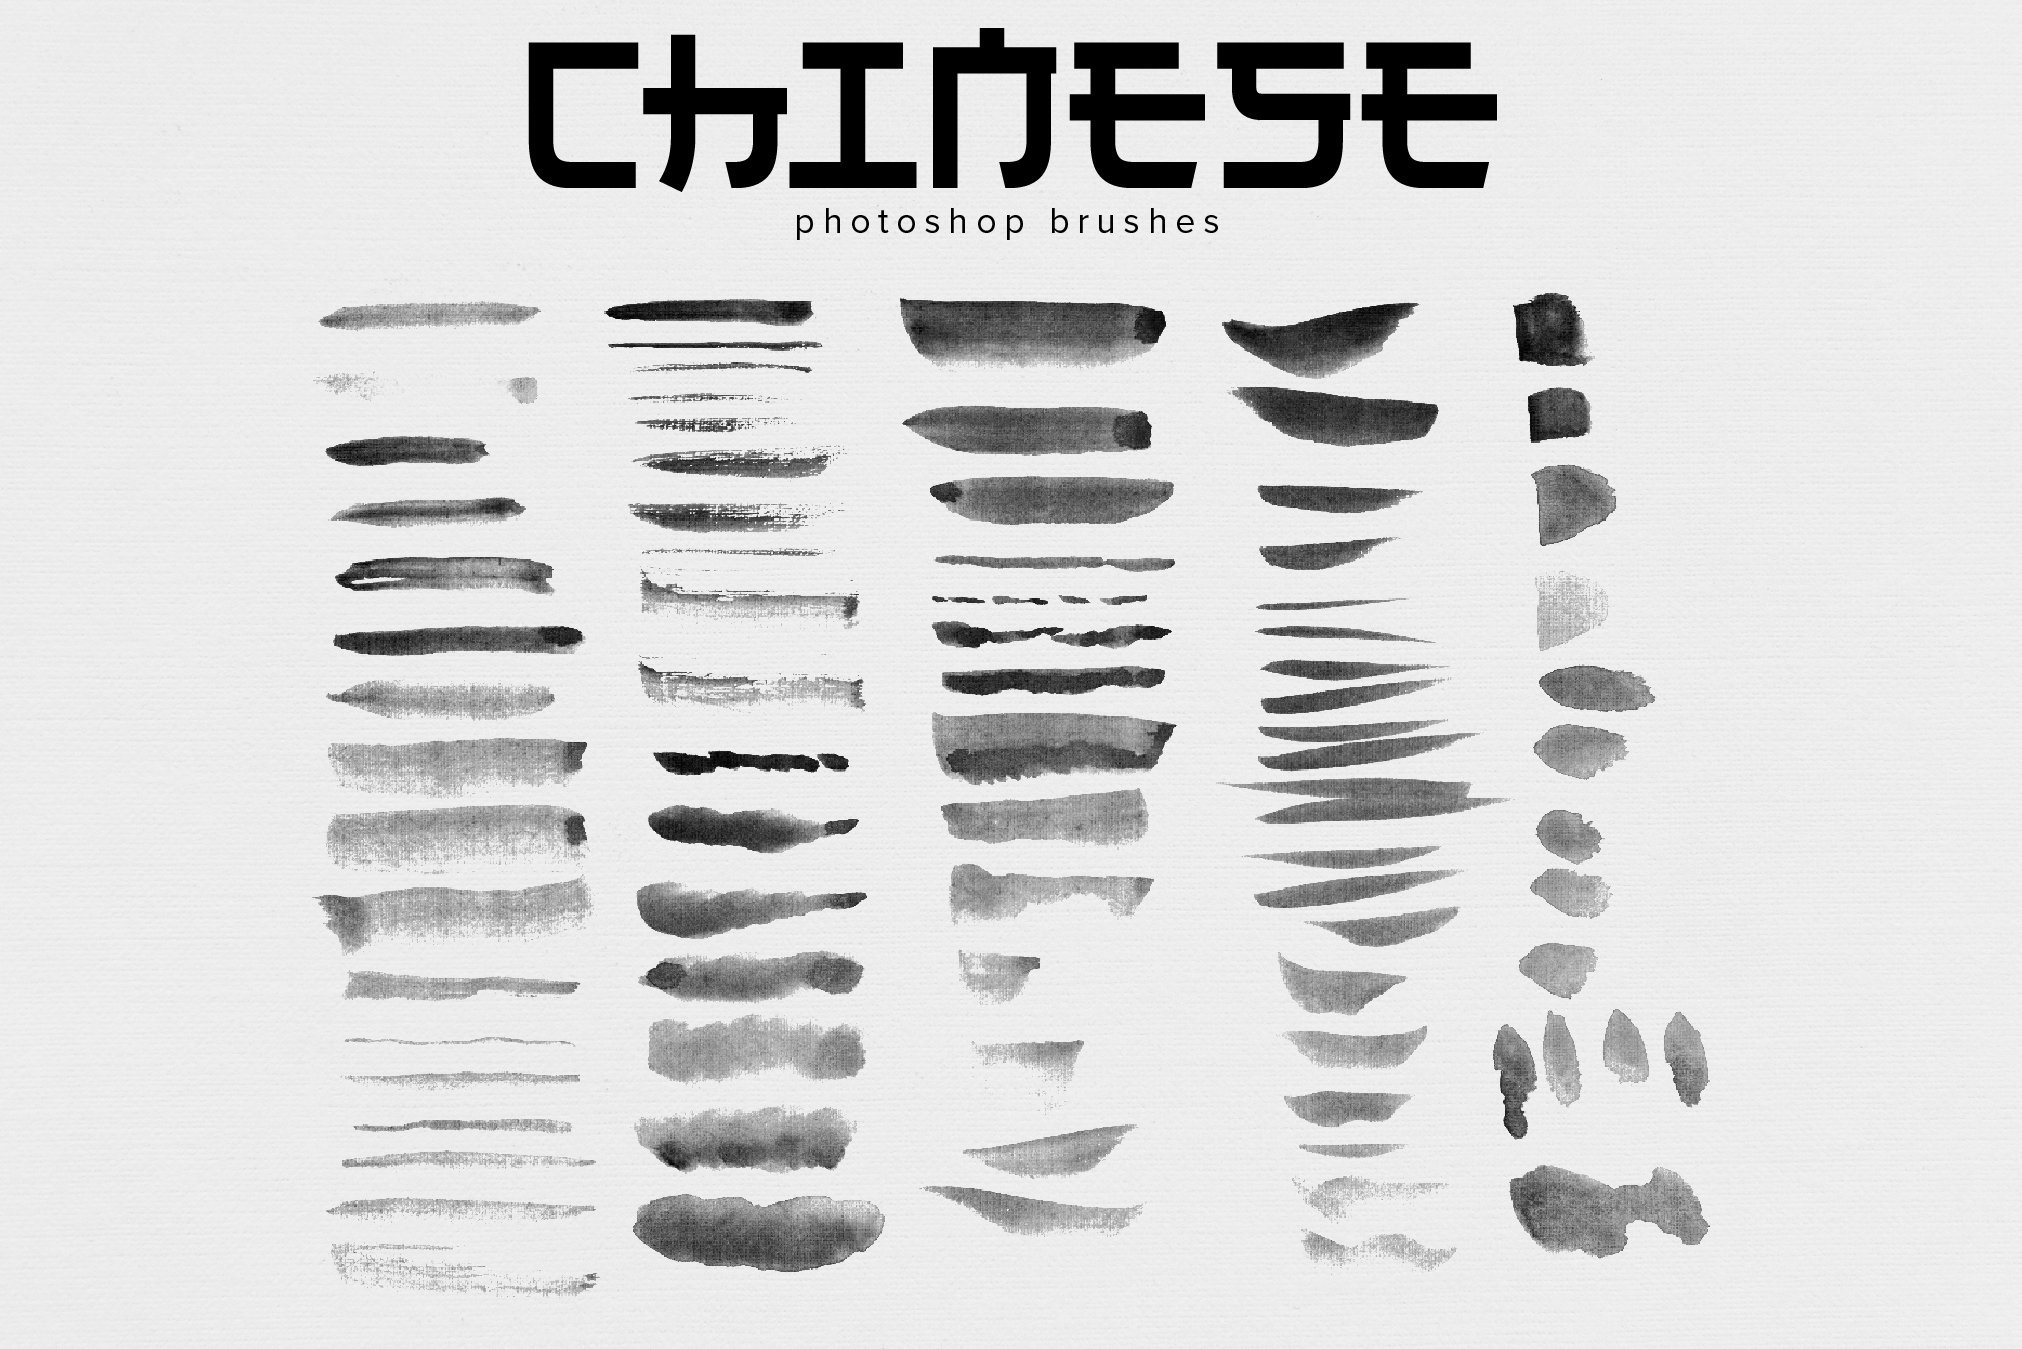 Chinese Photoshop brushespreview image.